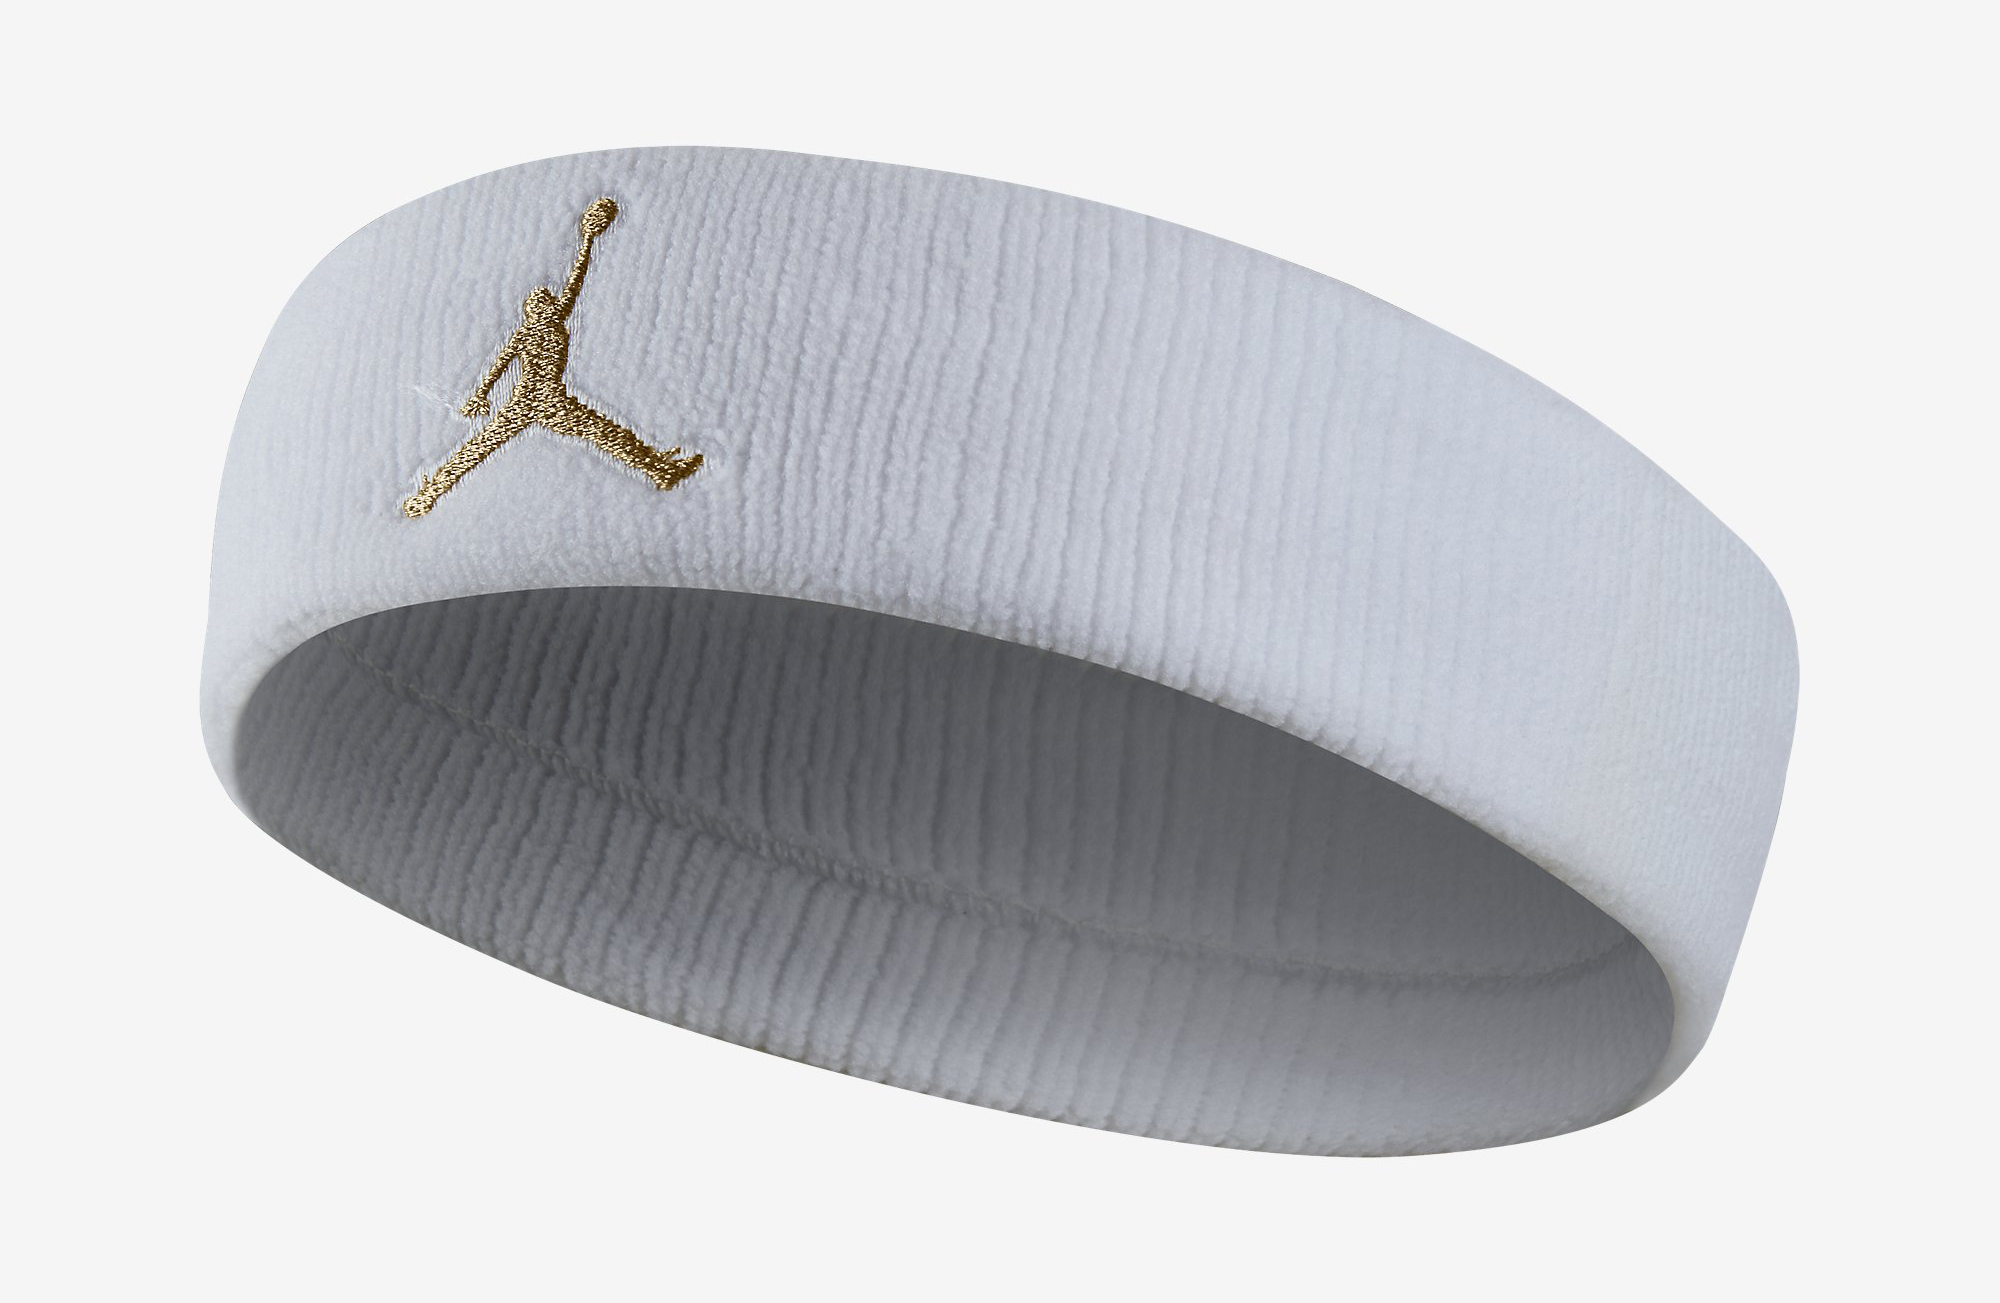 Drake OVO Air Jordan Headband